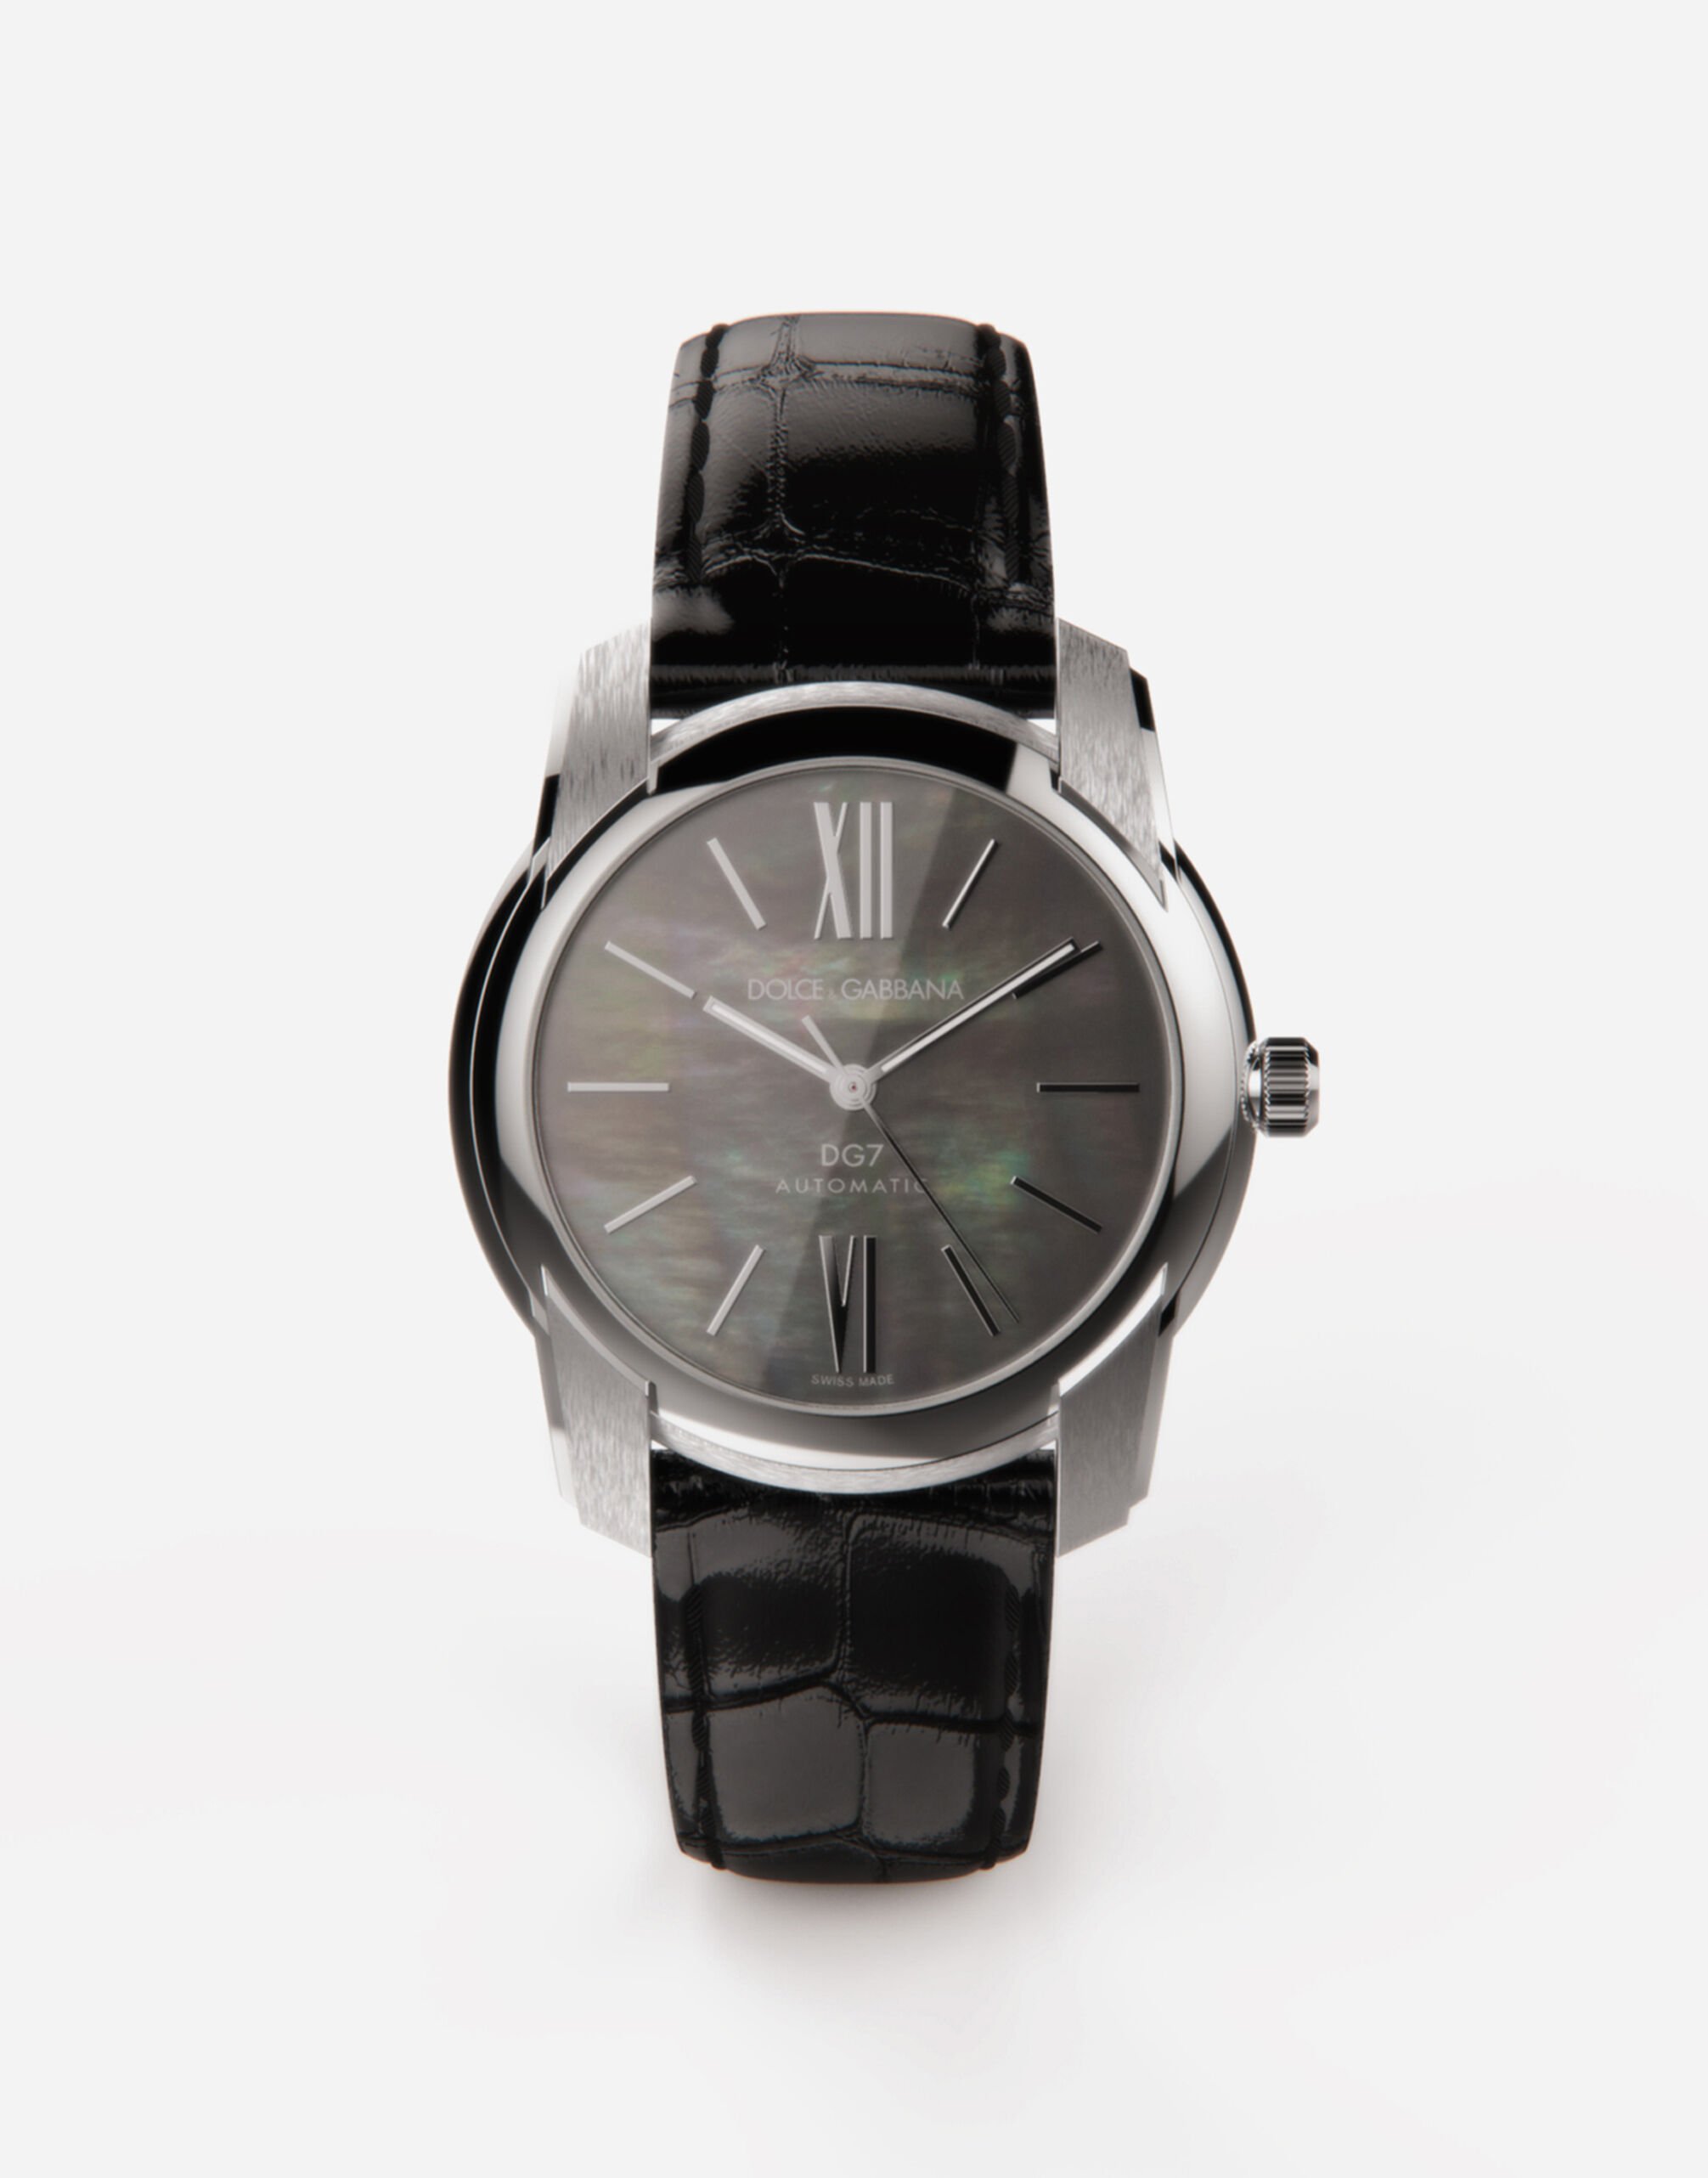 Dolce & Gabbana Reloj DG7 de acero con madreperla negra Burdeos WWEEGGWW045